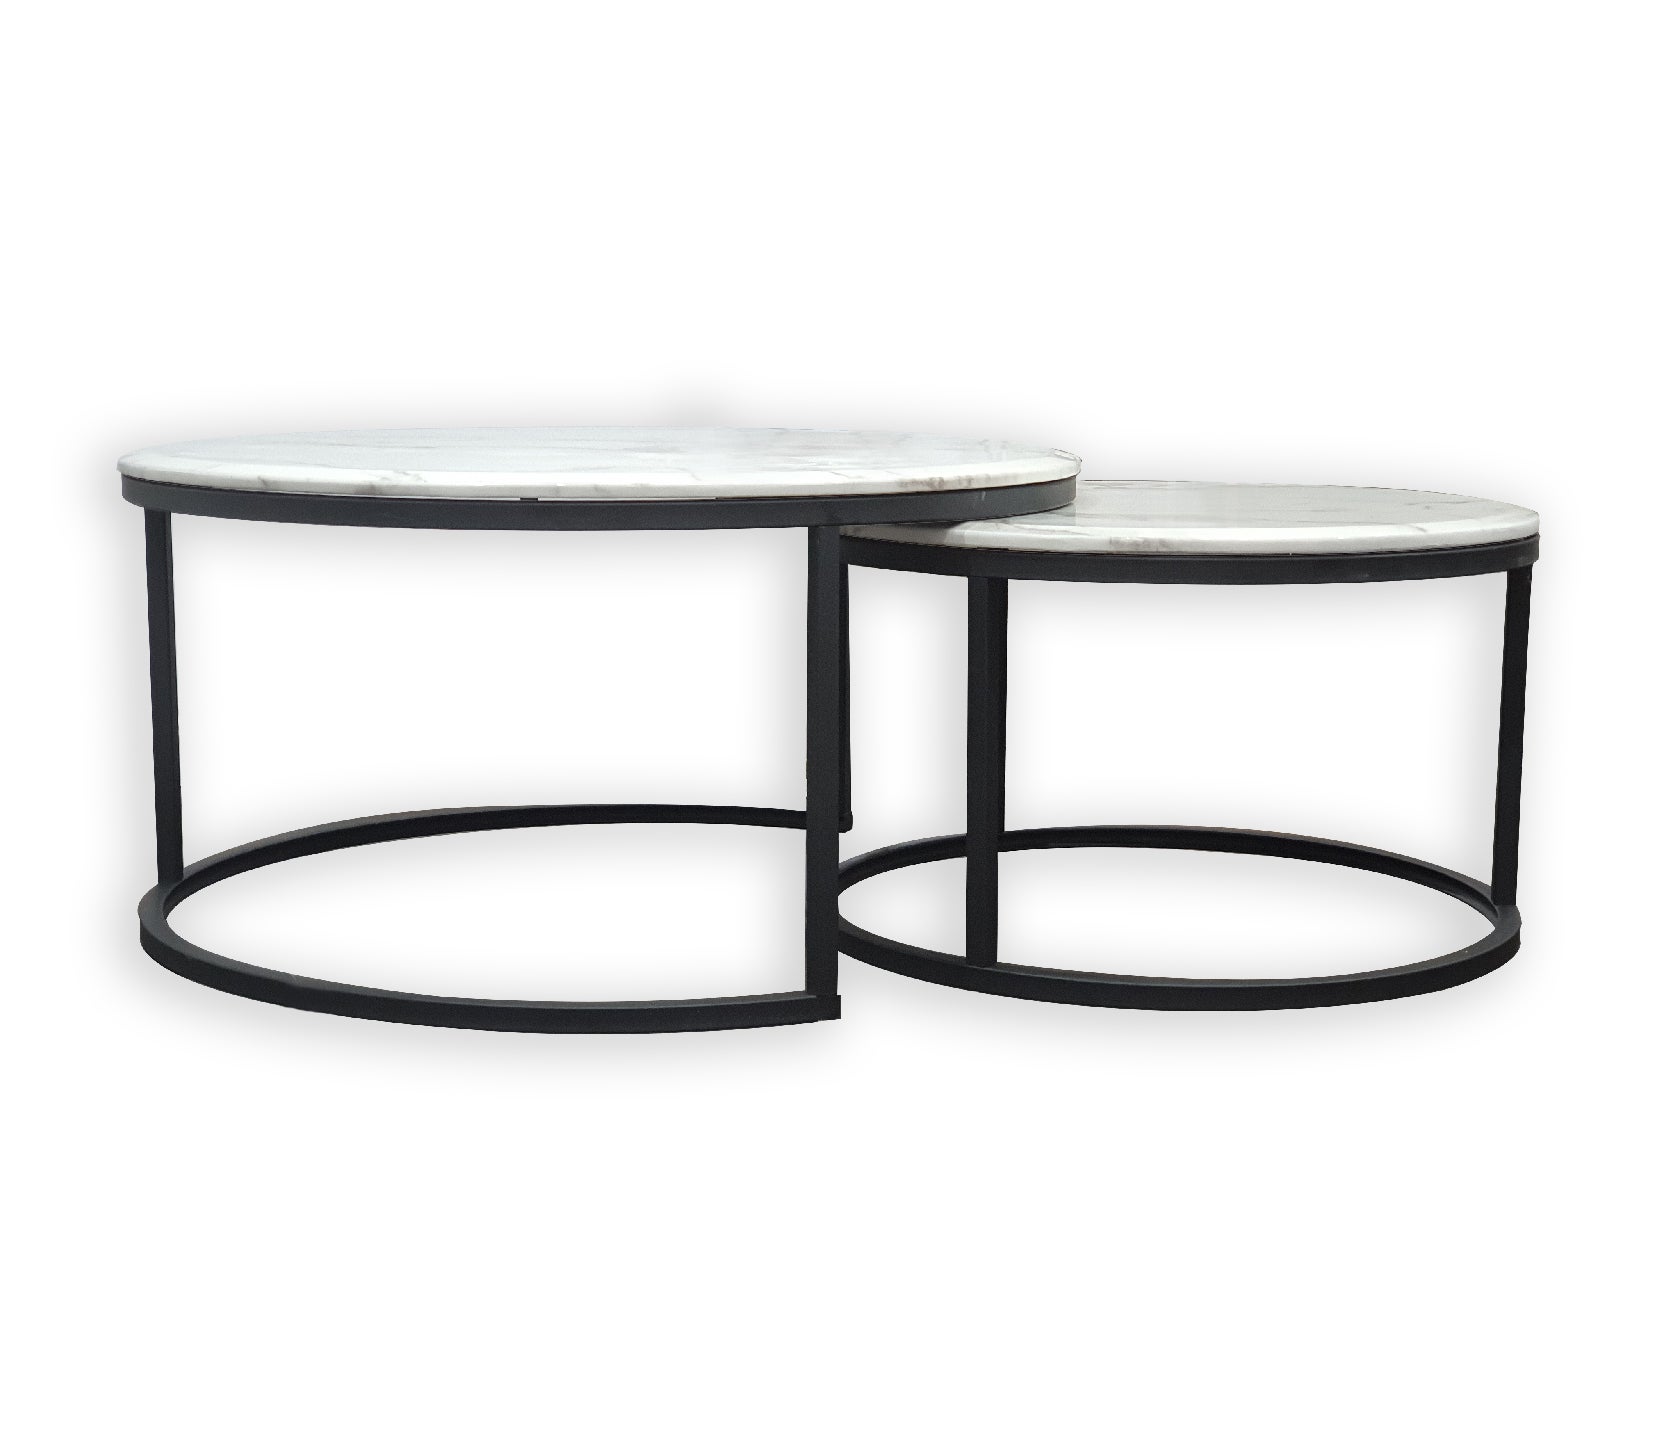 Romana set of 2 Marble Top Nesting Coffee Table - Large 80cm/60cm - Black